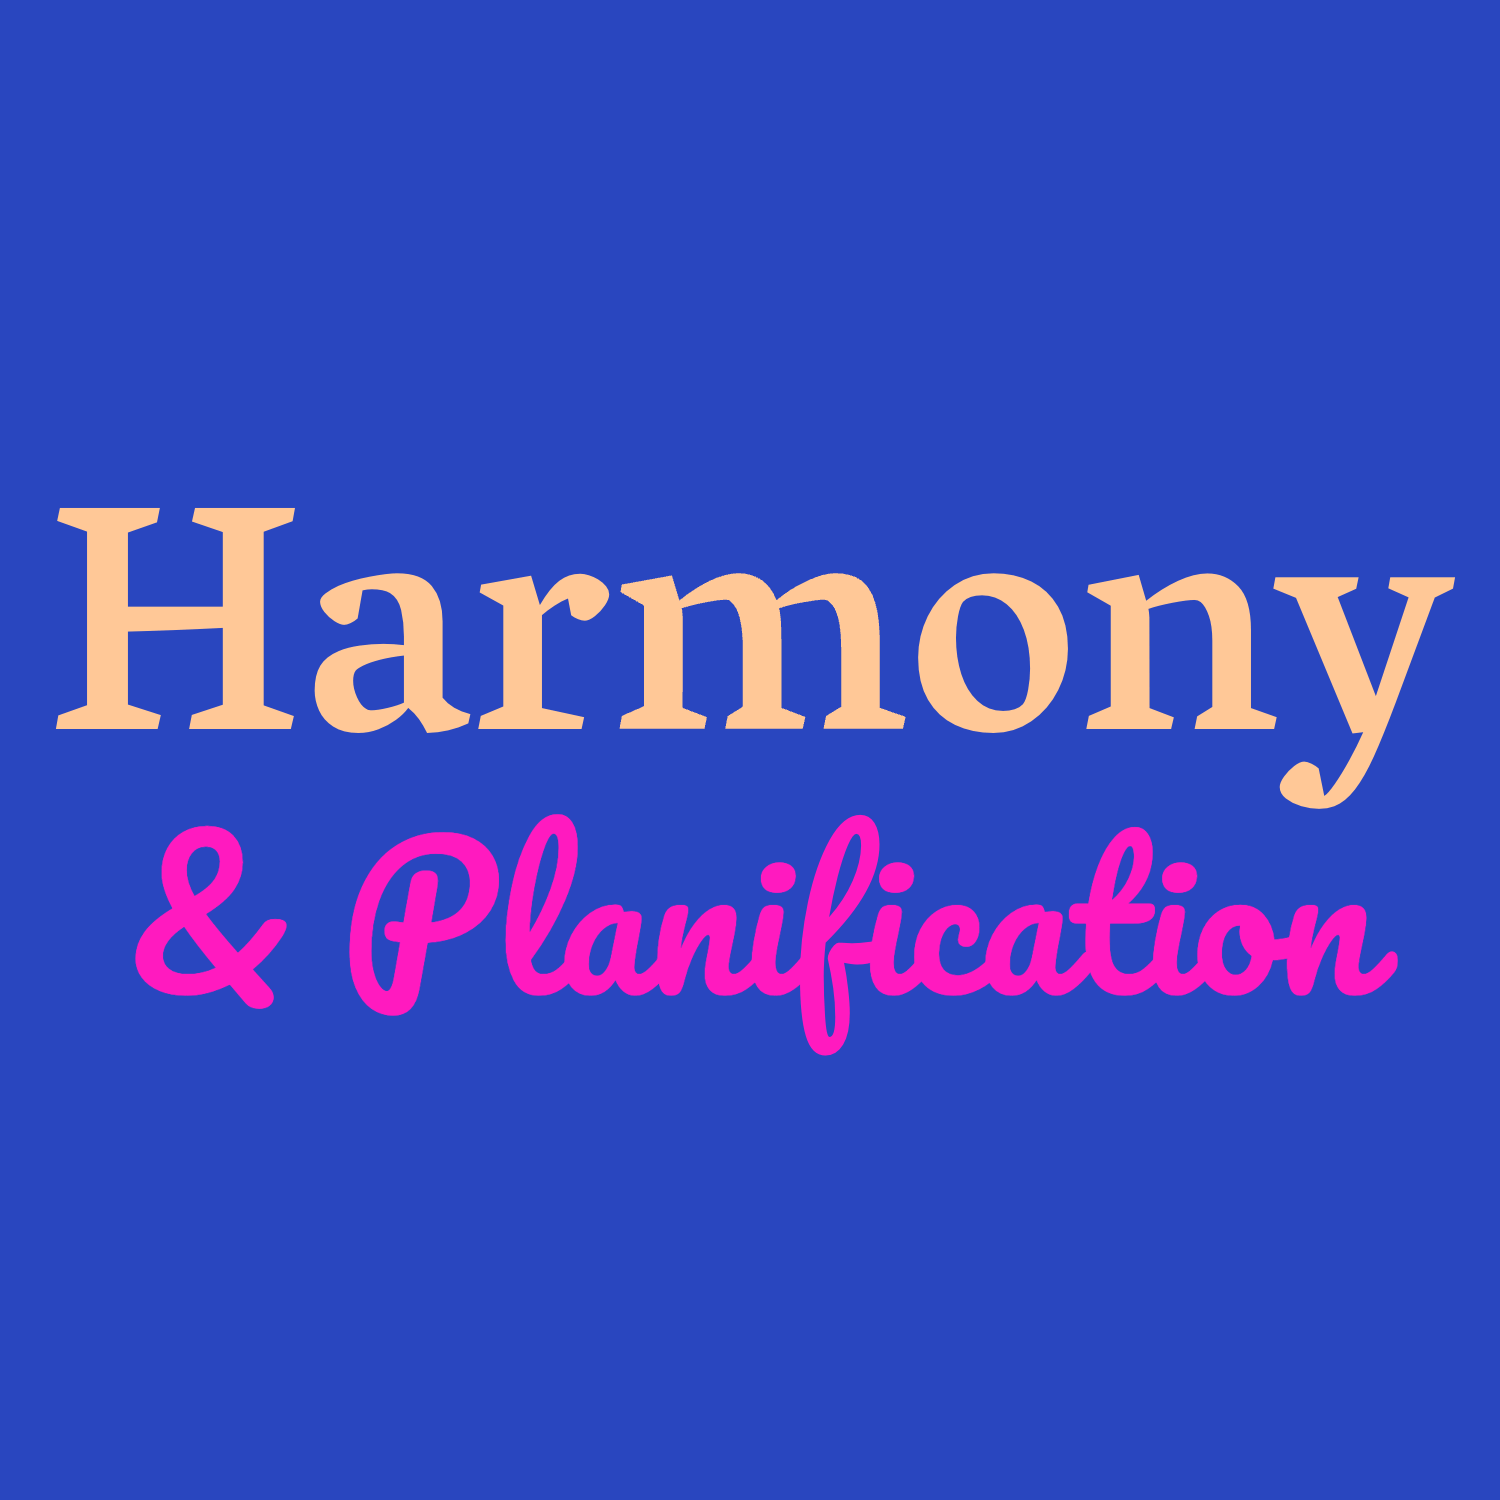 Photo de profil de Harmony & Planification